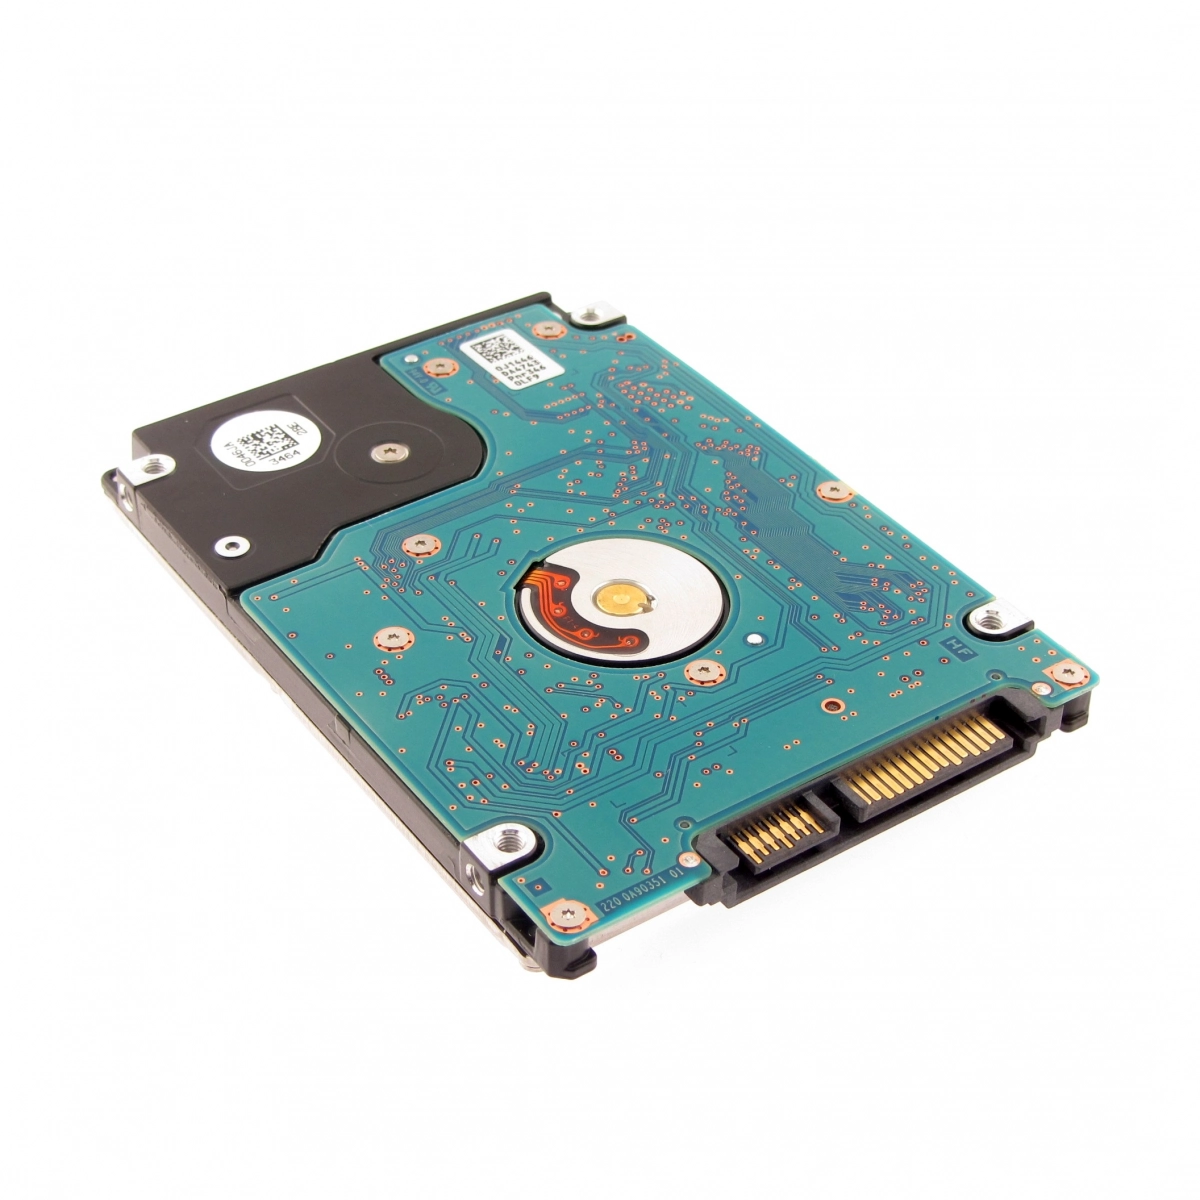 Notebook-Festplatte 500GB, 7mm, 5400rpm, 8MB für LENOVO ThinkPad T420s